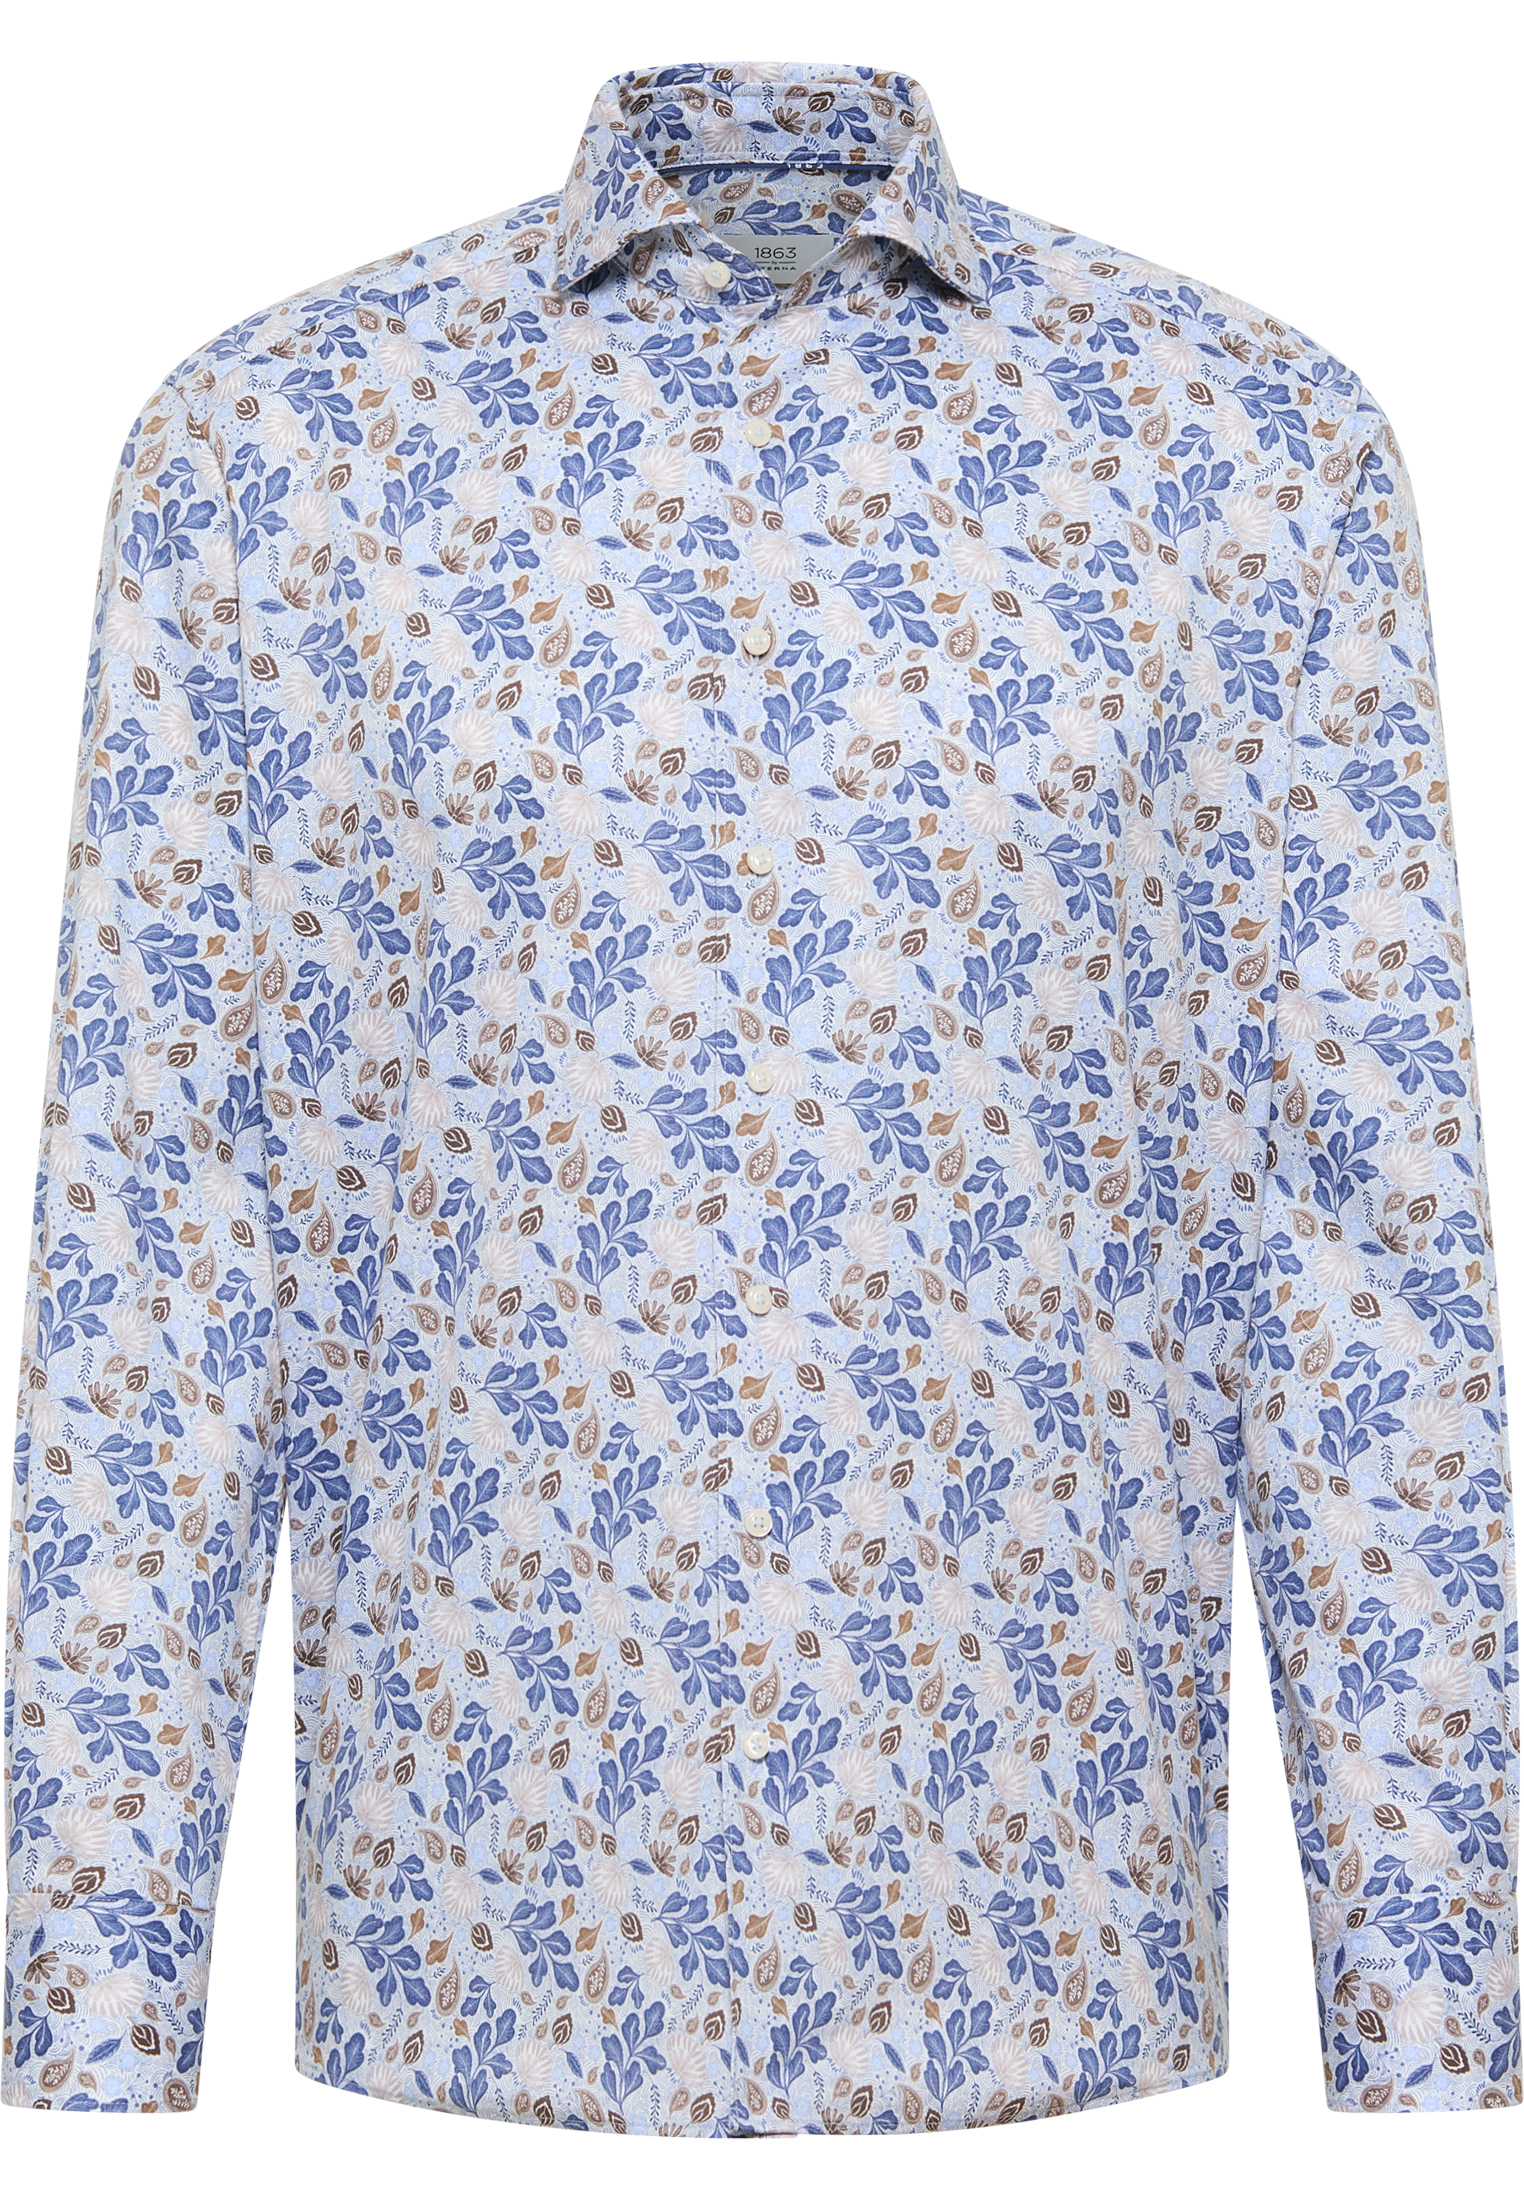 COMFORT FIT Hemd in royal blau bedruckt